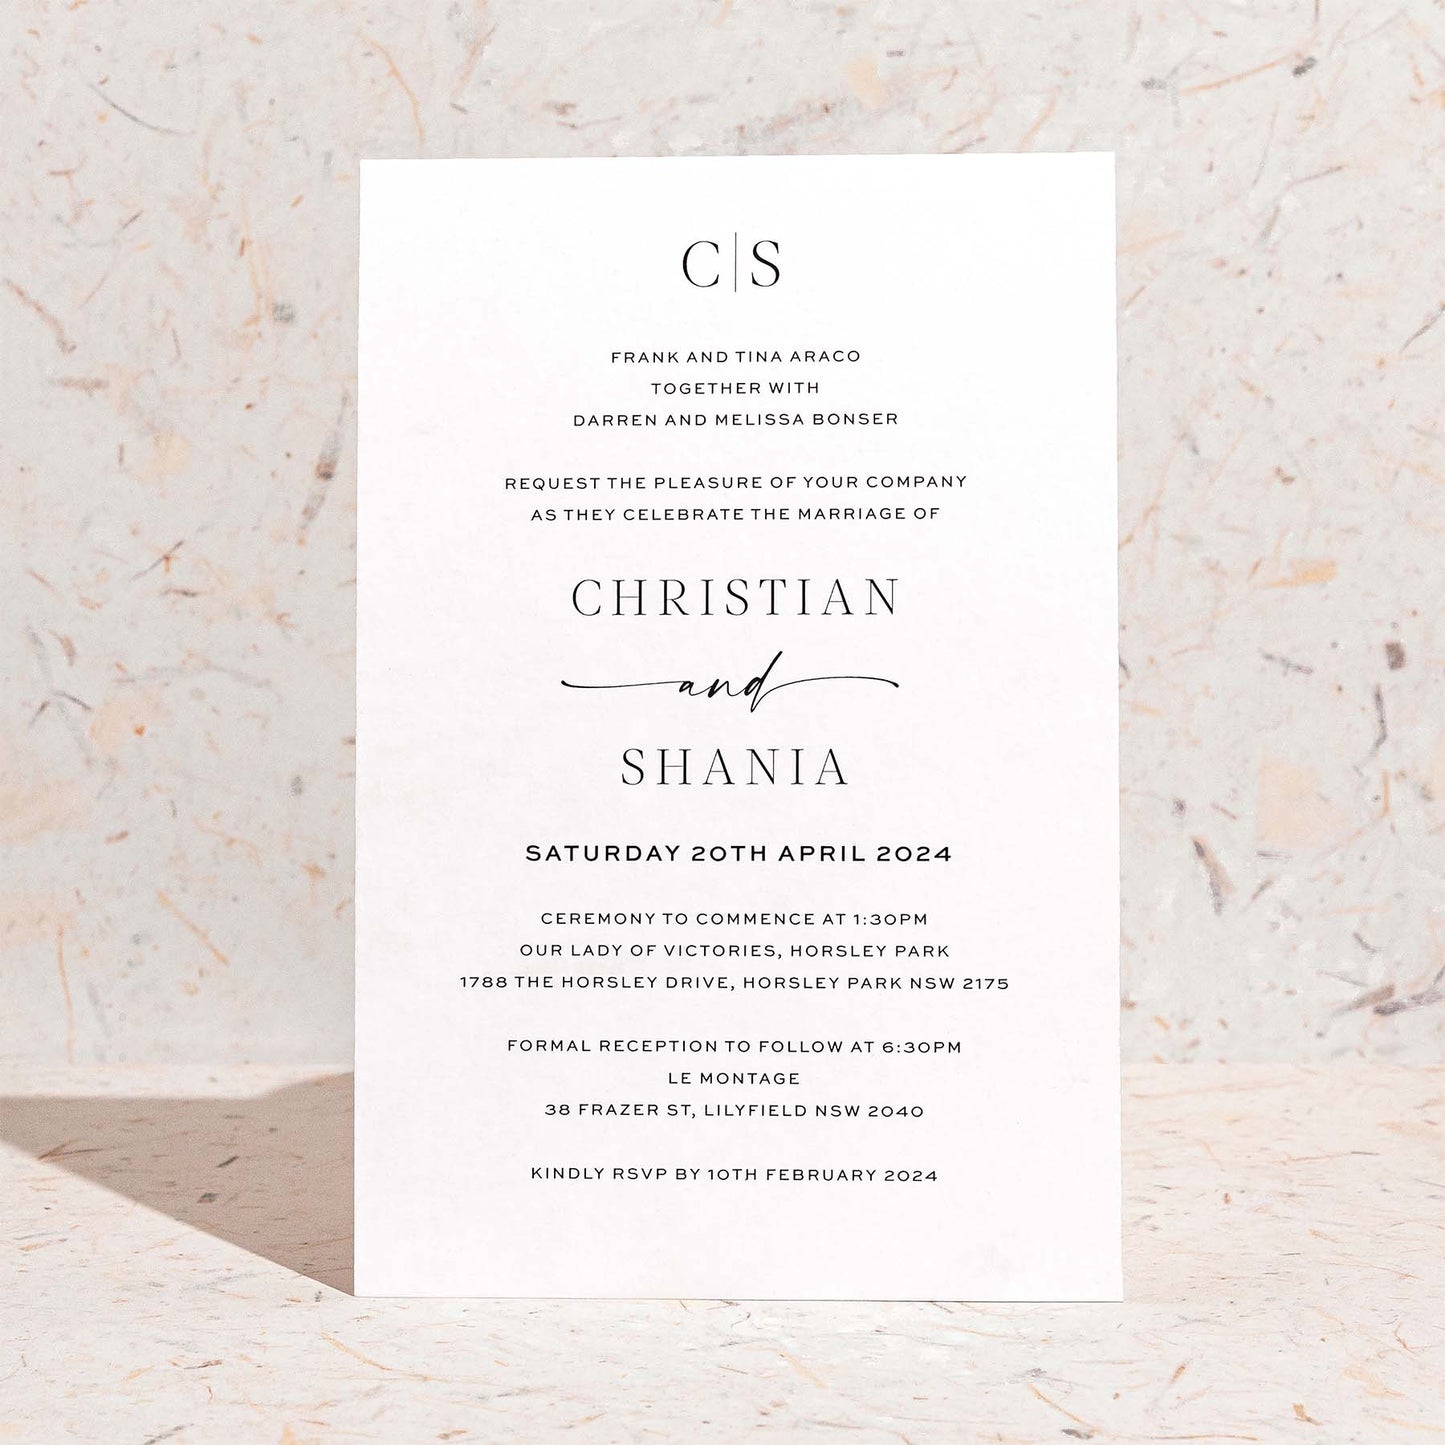 Christian and Shania Invitation